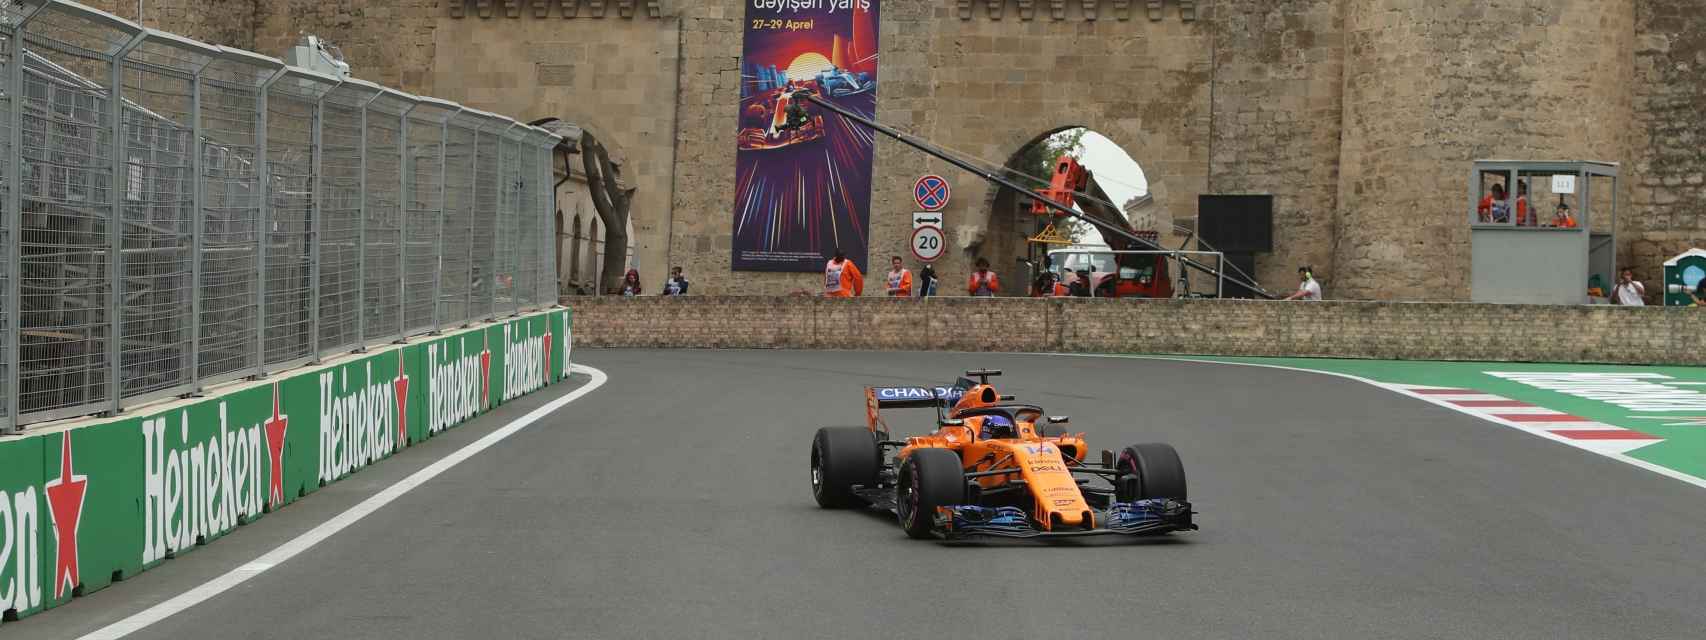 Azerbaijan Formula One Grand Prix